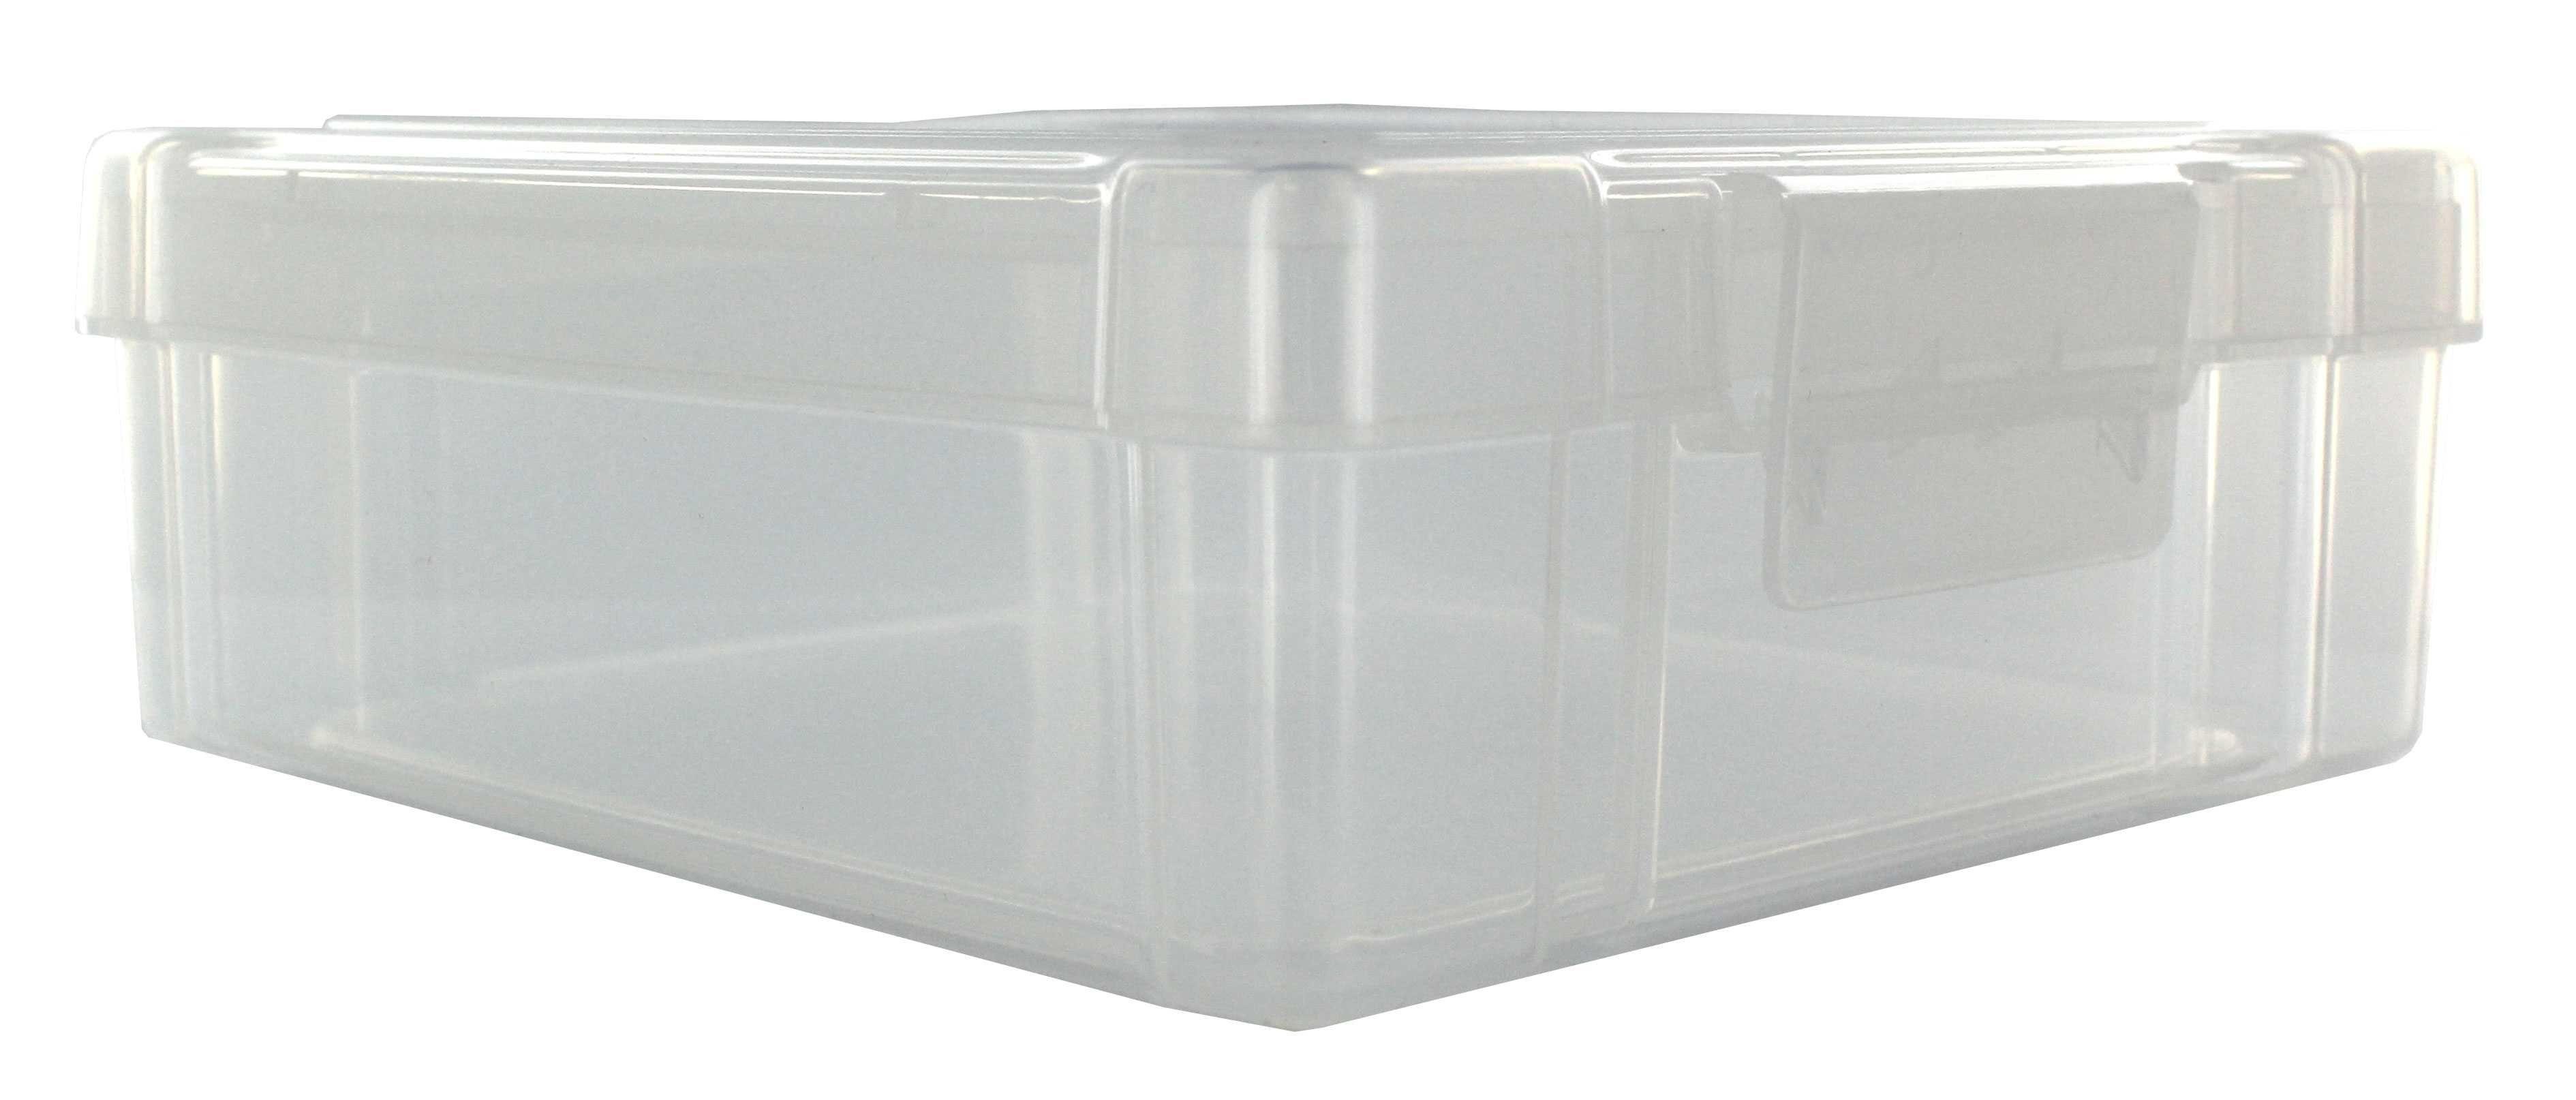 ArtBin Essentials Storage Box 6x6 Clear